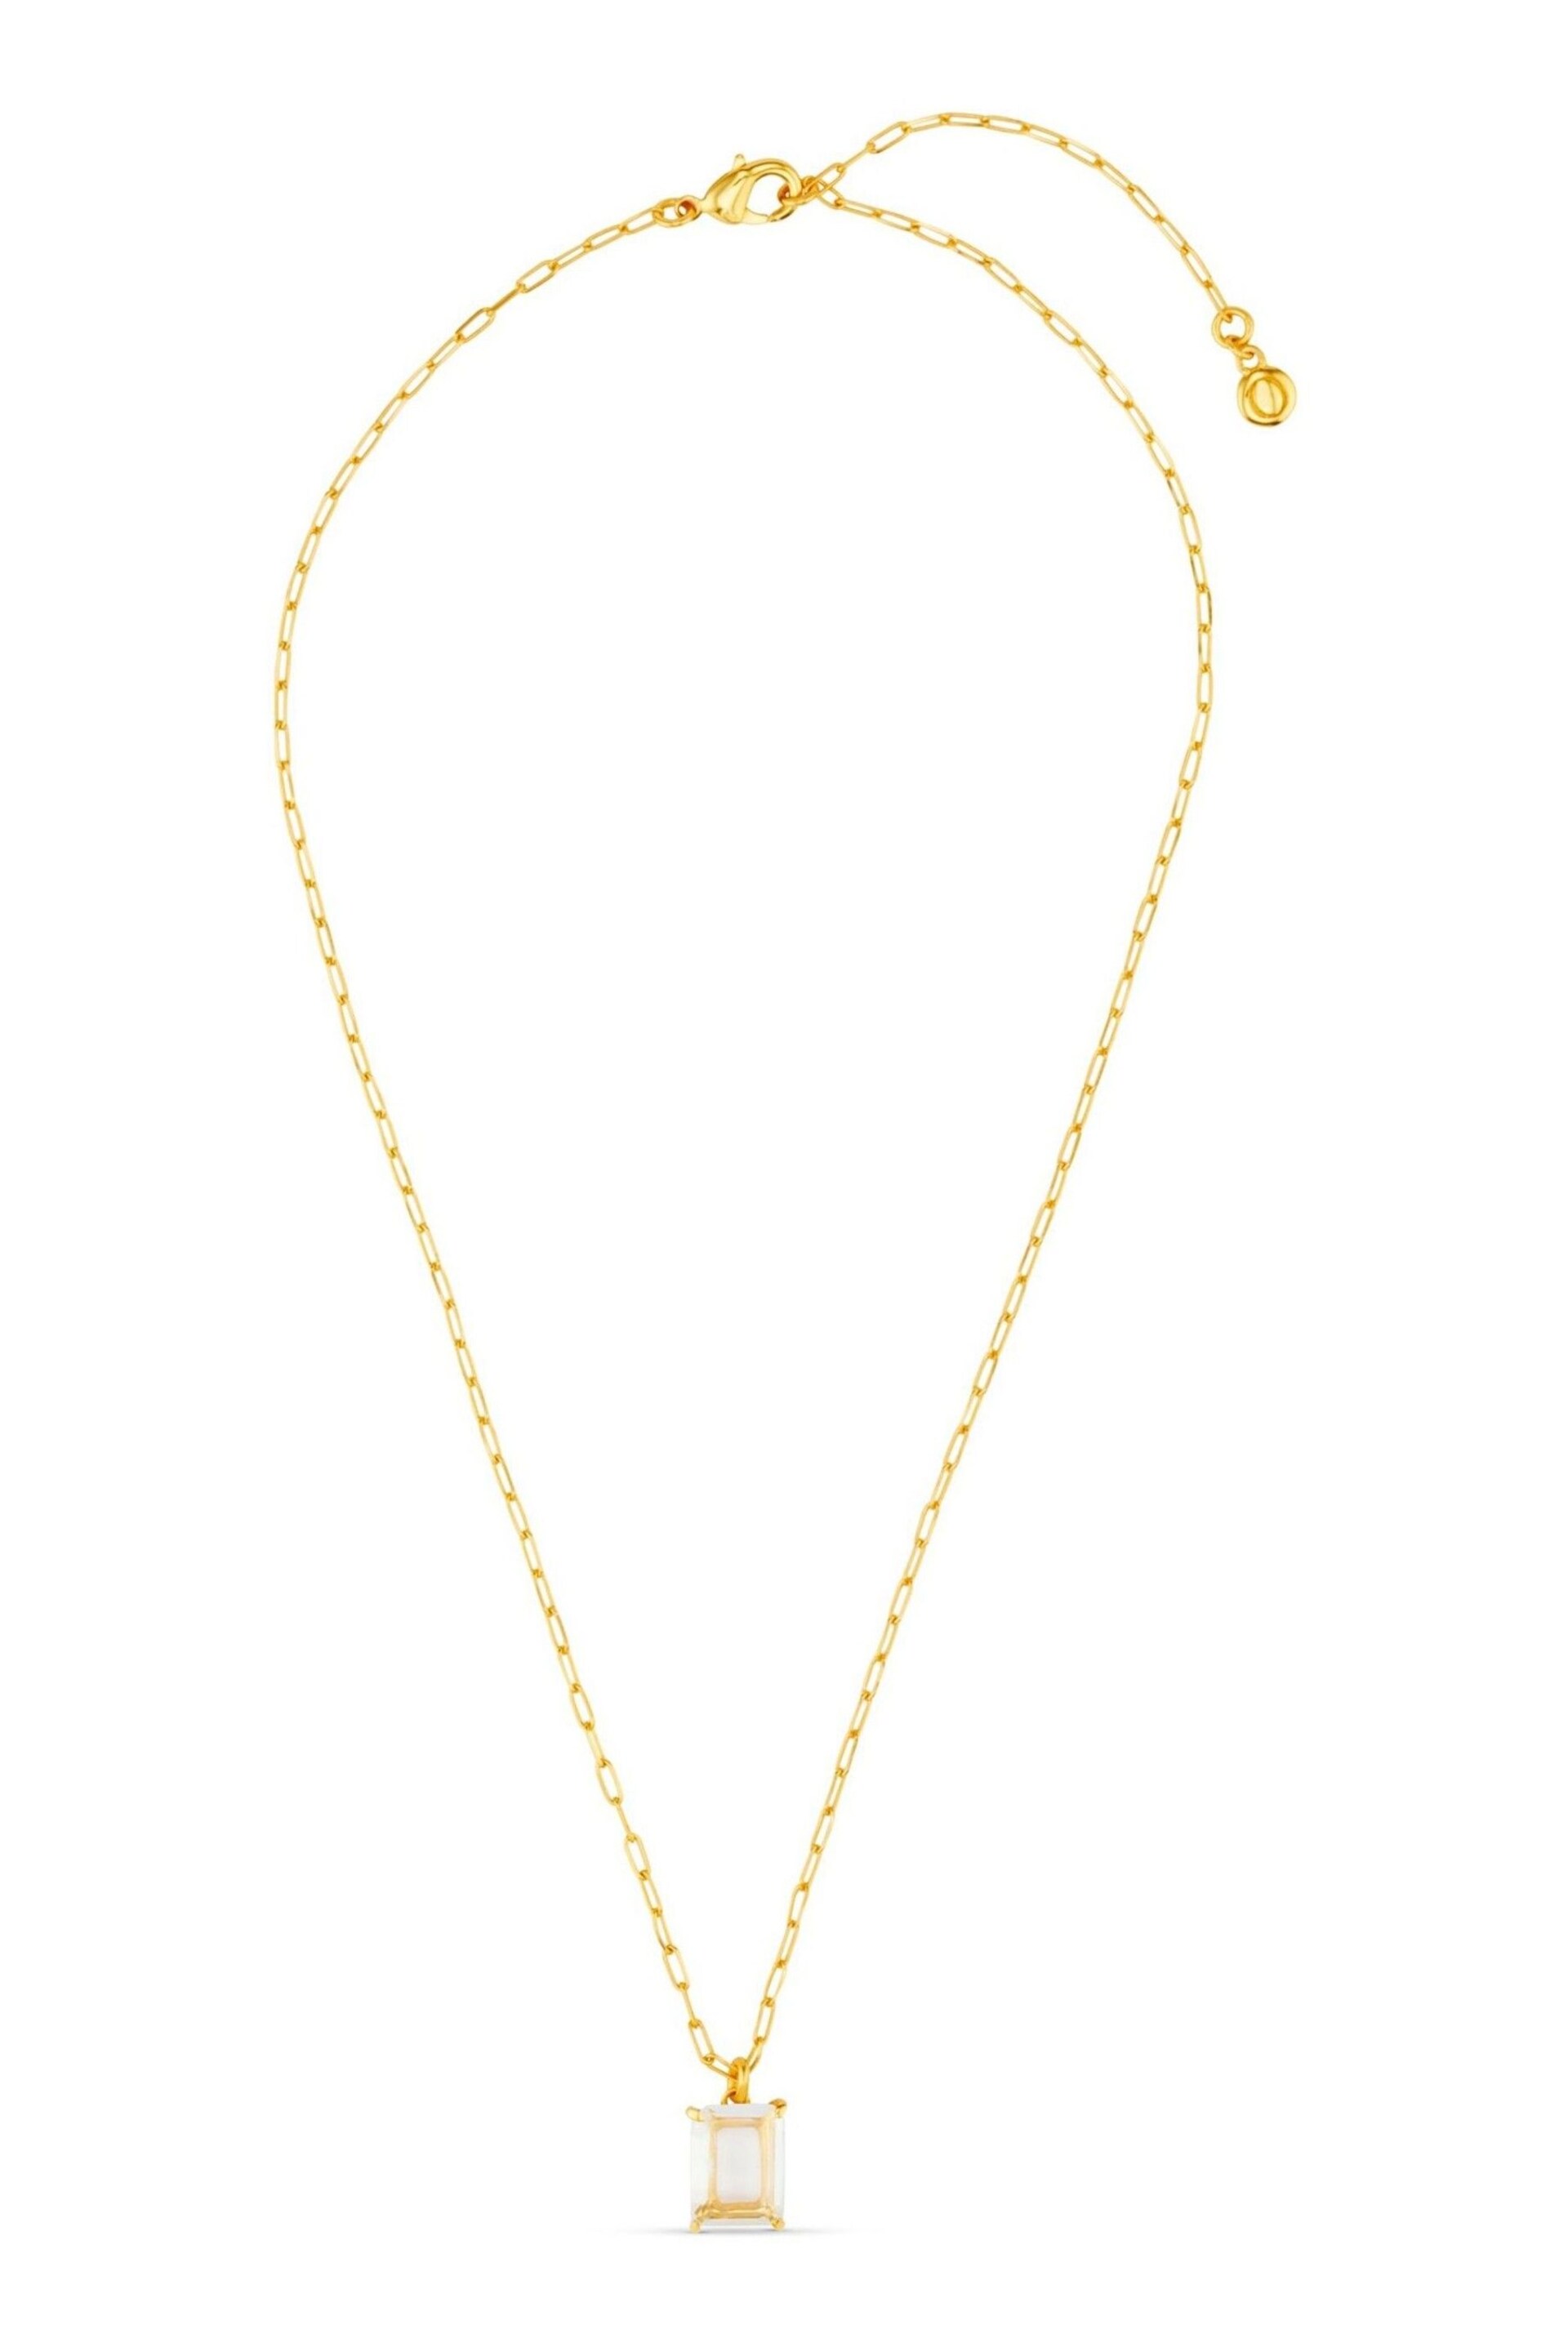 Orelia London 18k Gold Plating Semi Precious Claw Set Necklace - Image 1 of 3